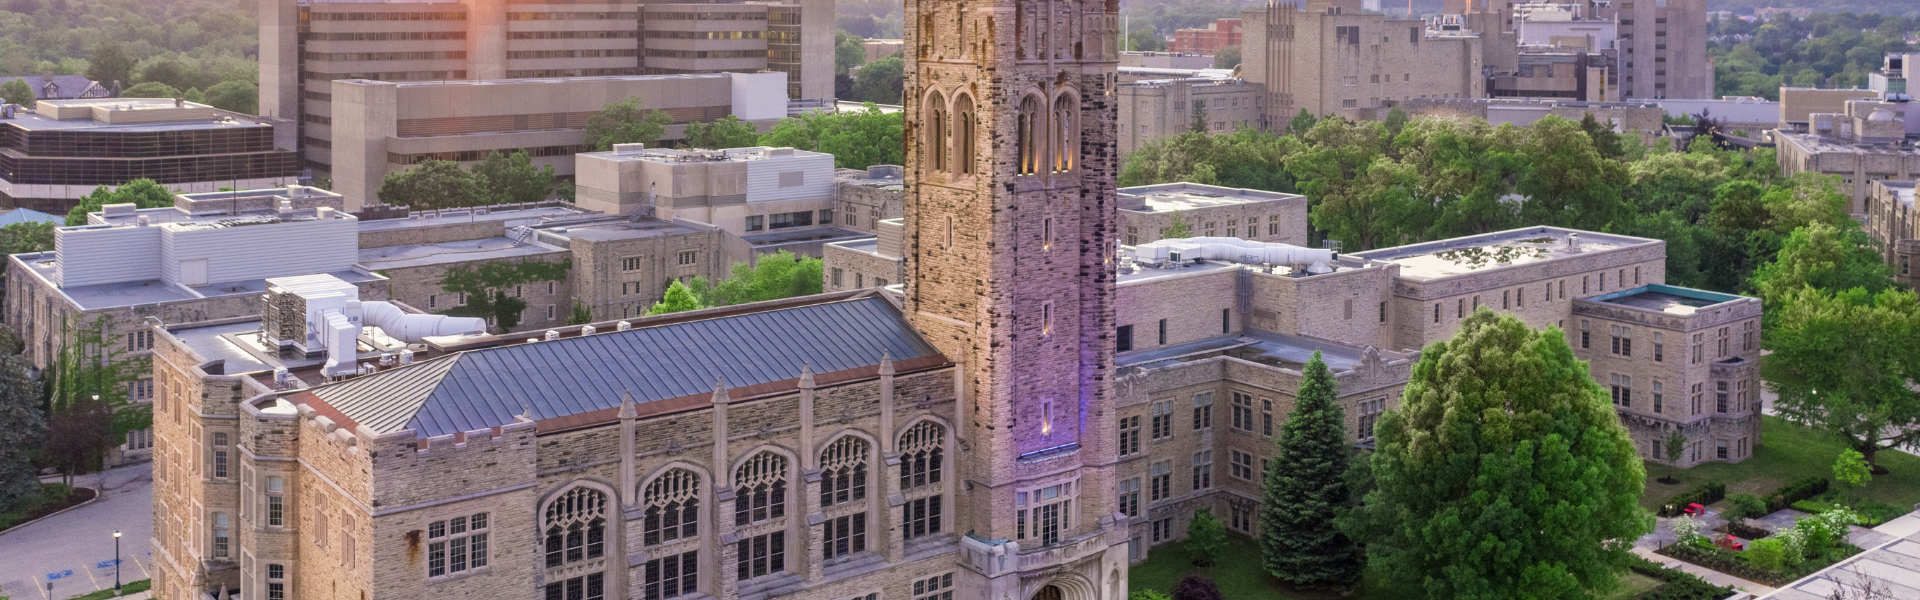 Overhead image of University College